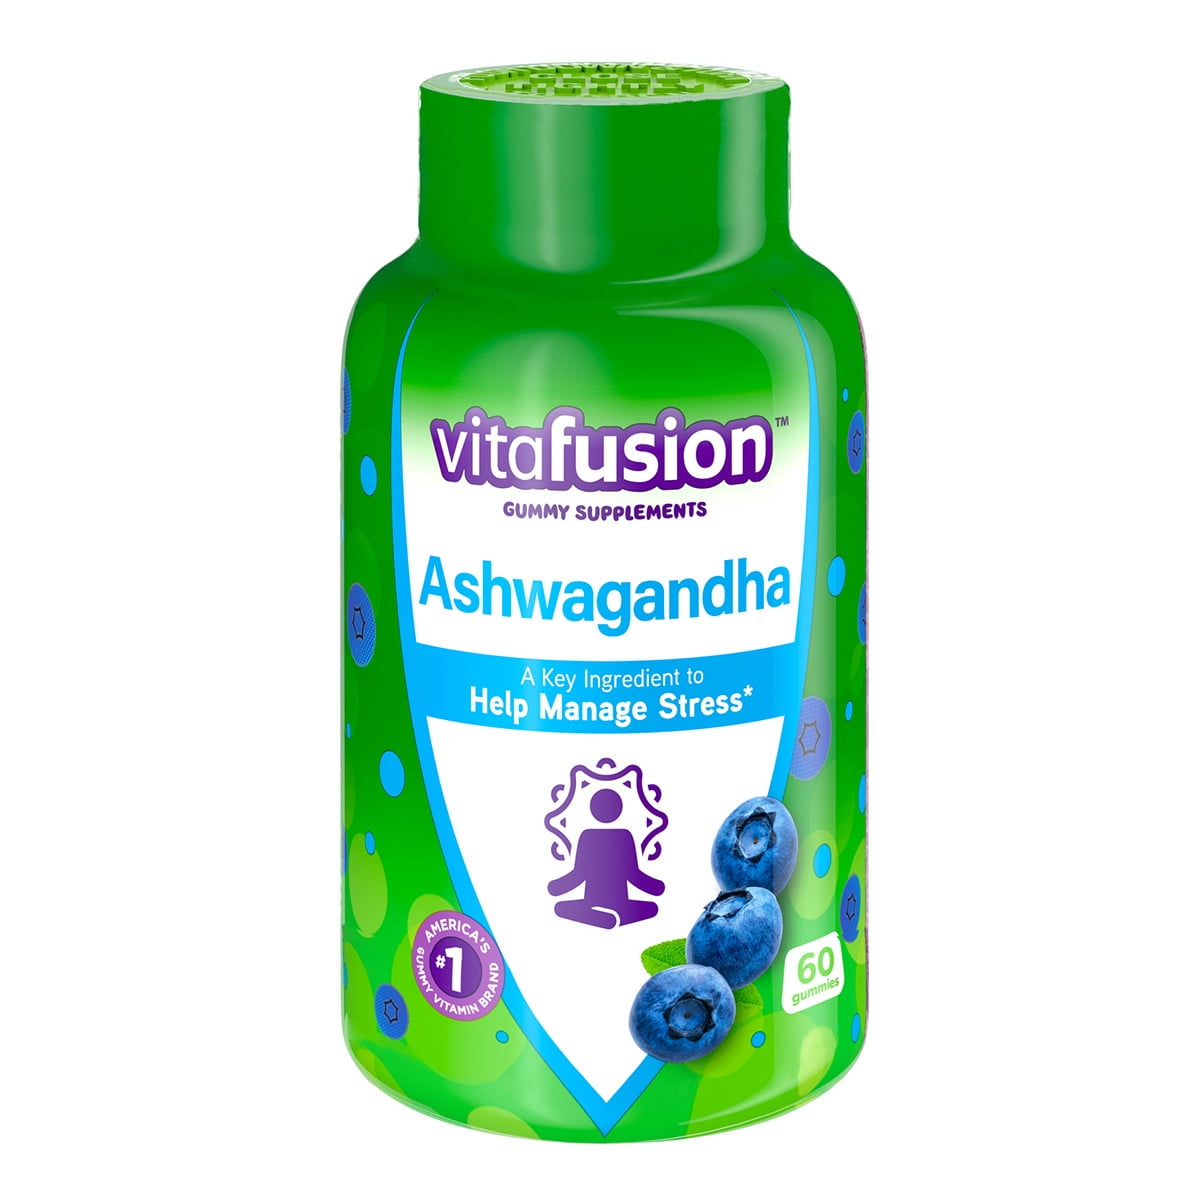 Vitafusion Ashwagandha Gummies  Clinically Shown Adaptogen Sensoril Ashwagandha 125mg Per Serving  Help Manage Stress - 60 Count